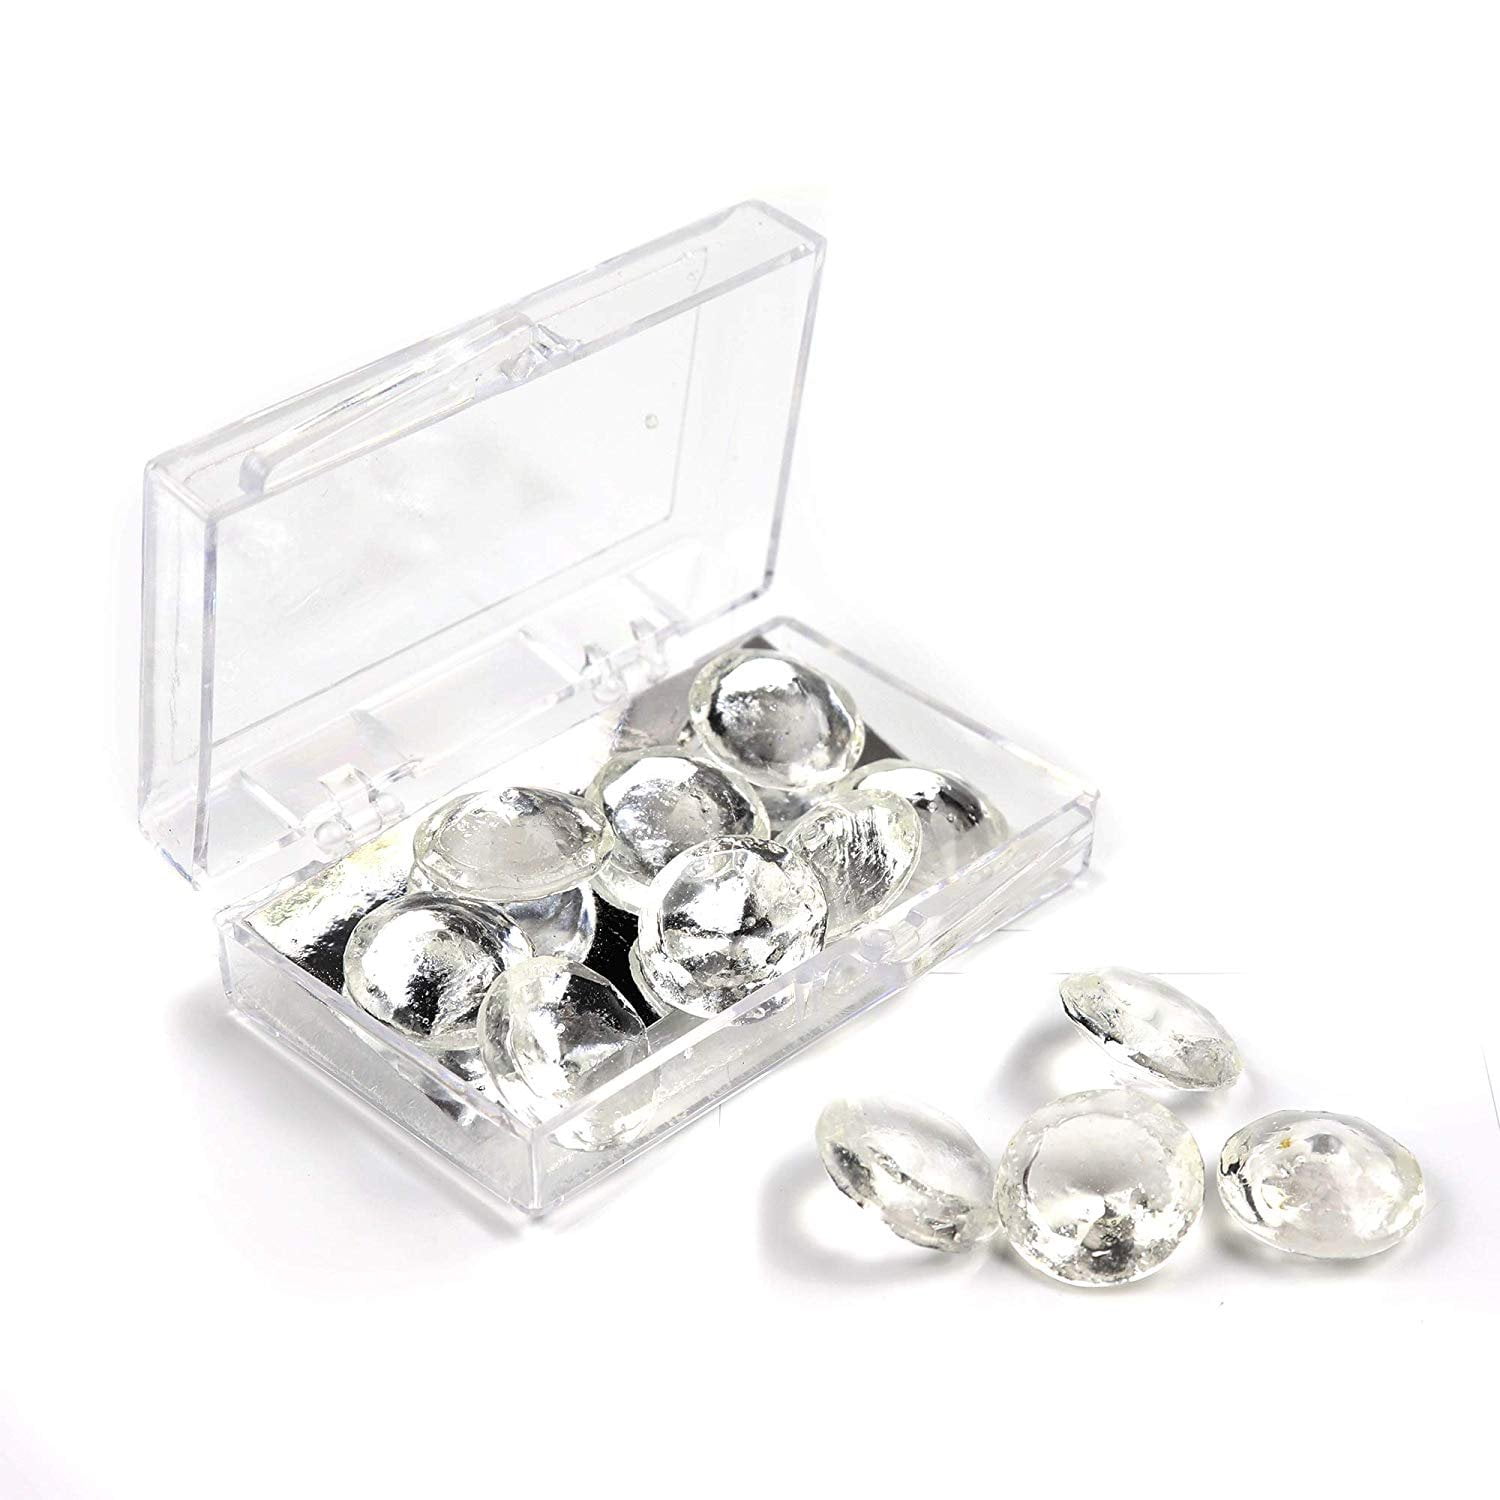 8mm SMALL EDIBLE SUGAR DIAMONDS Wedding Cake Jewelry Decoration Pack of 28 